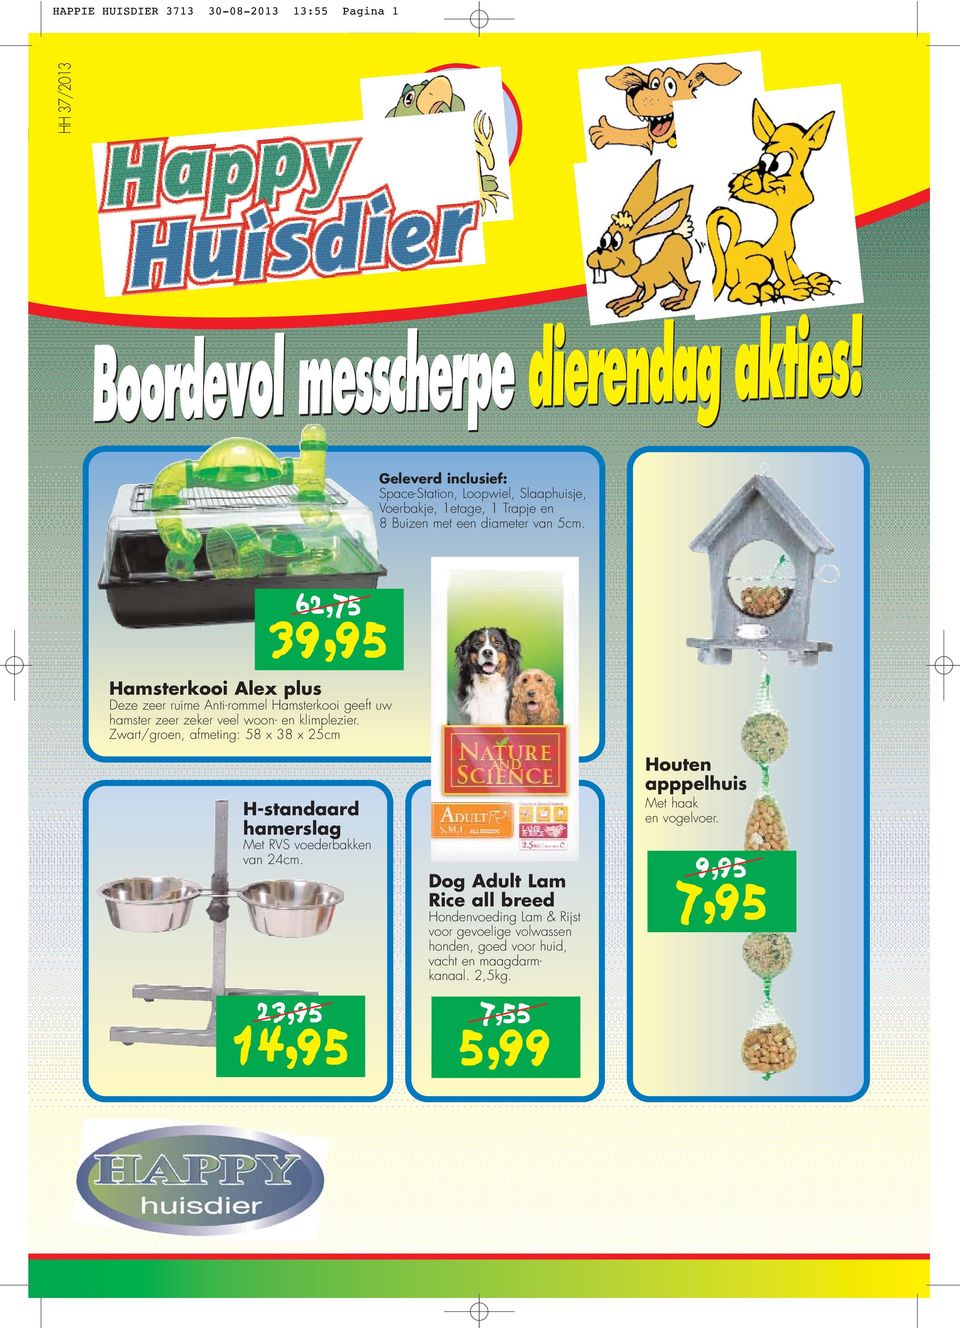 62,75 Hamsterkooi Alex plus Deze zeer ruime Anti-rommel Hamsterkooi geeft uw hamster zeer zeker veel woon- en klimplezier.